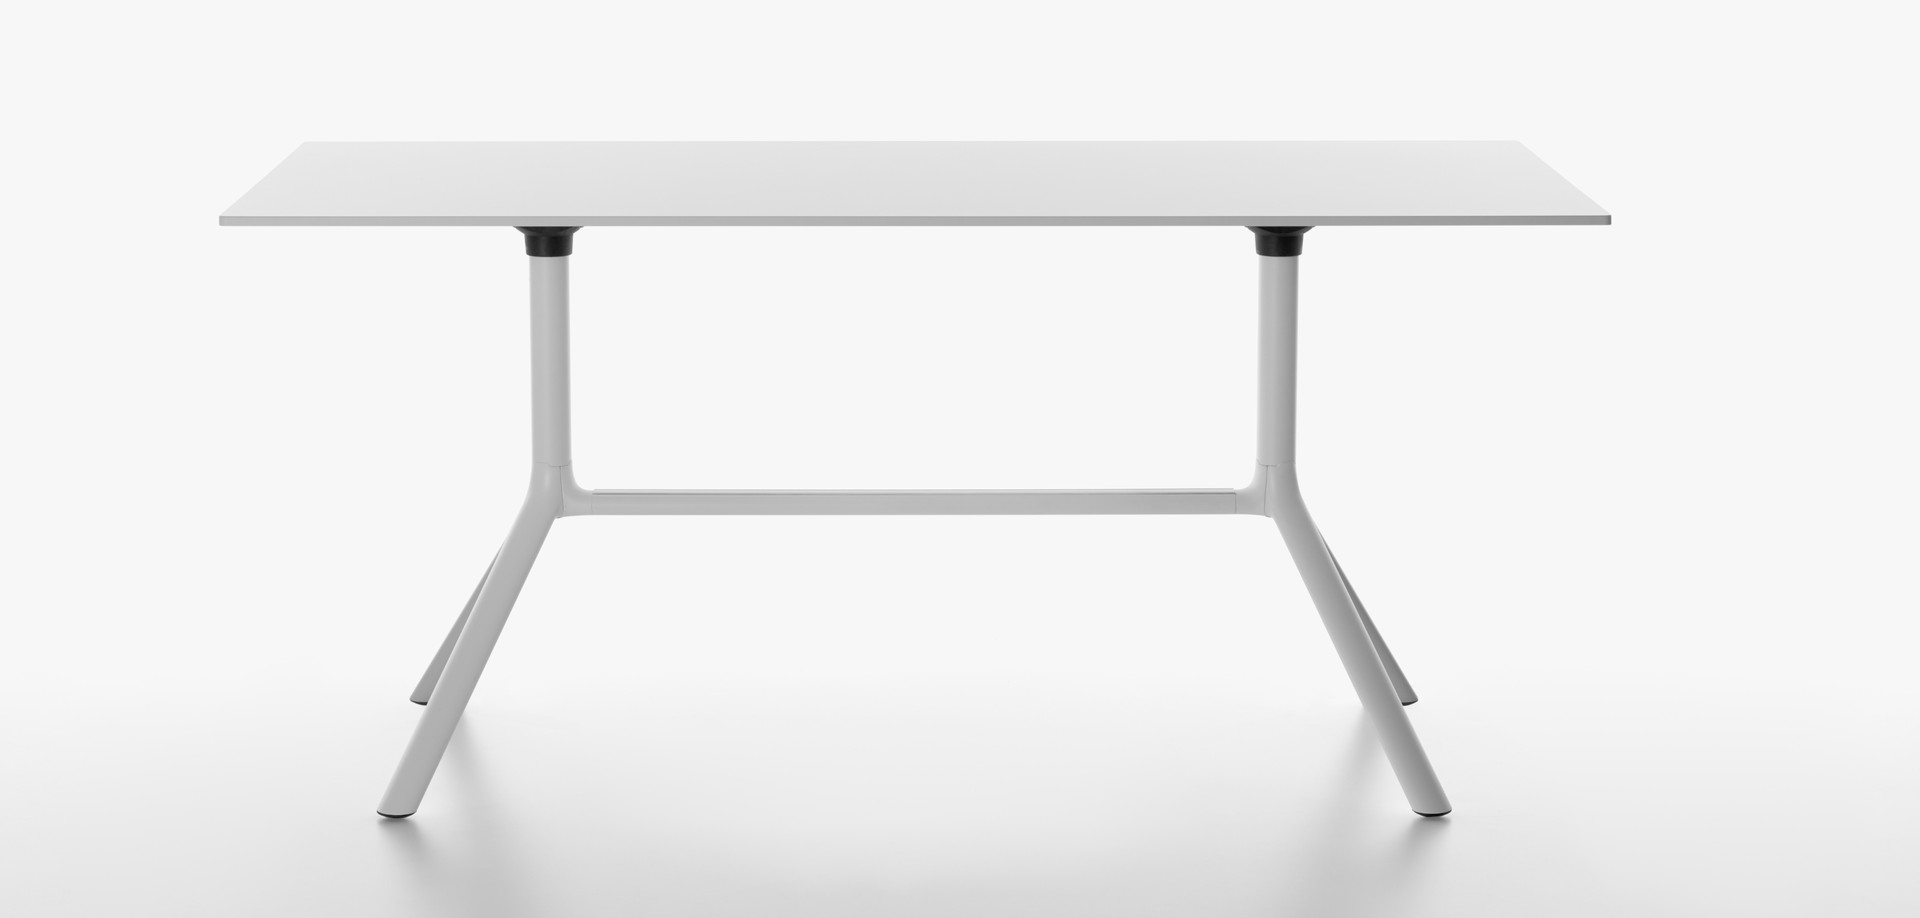 Plank - MIURA table rectangular table top, 73 cm high, white